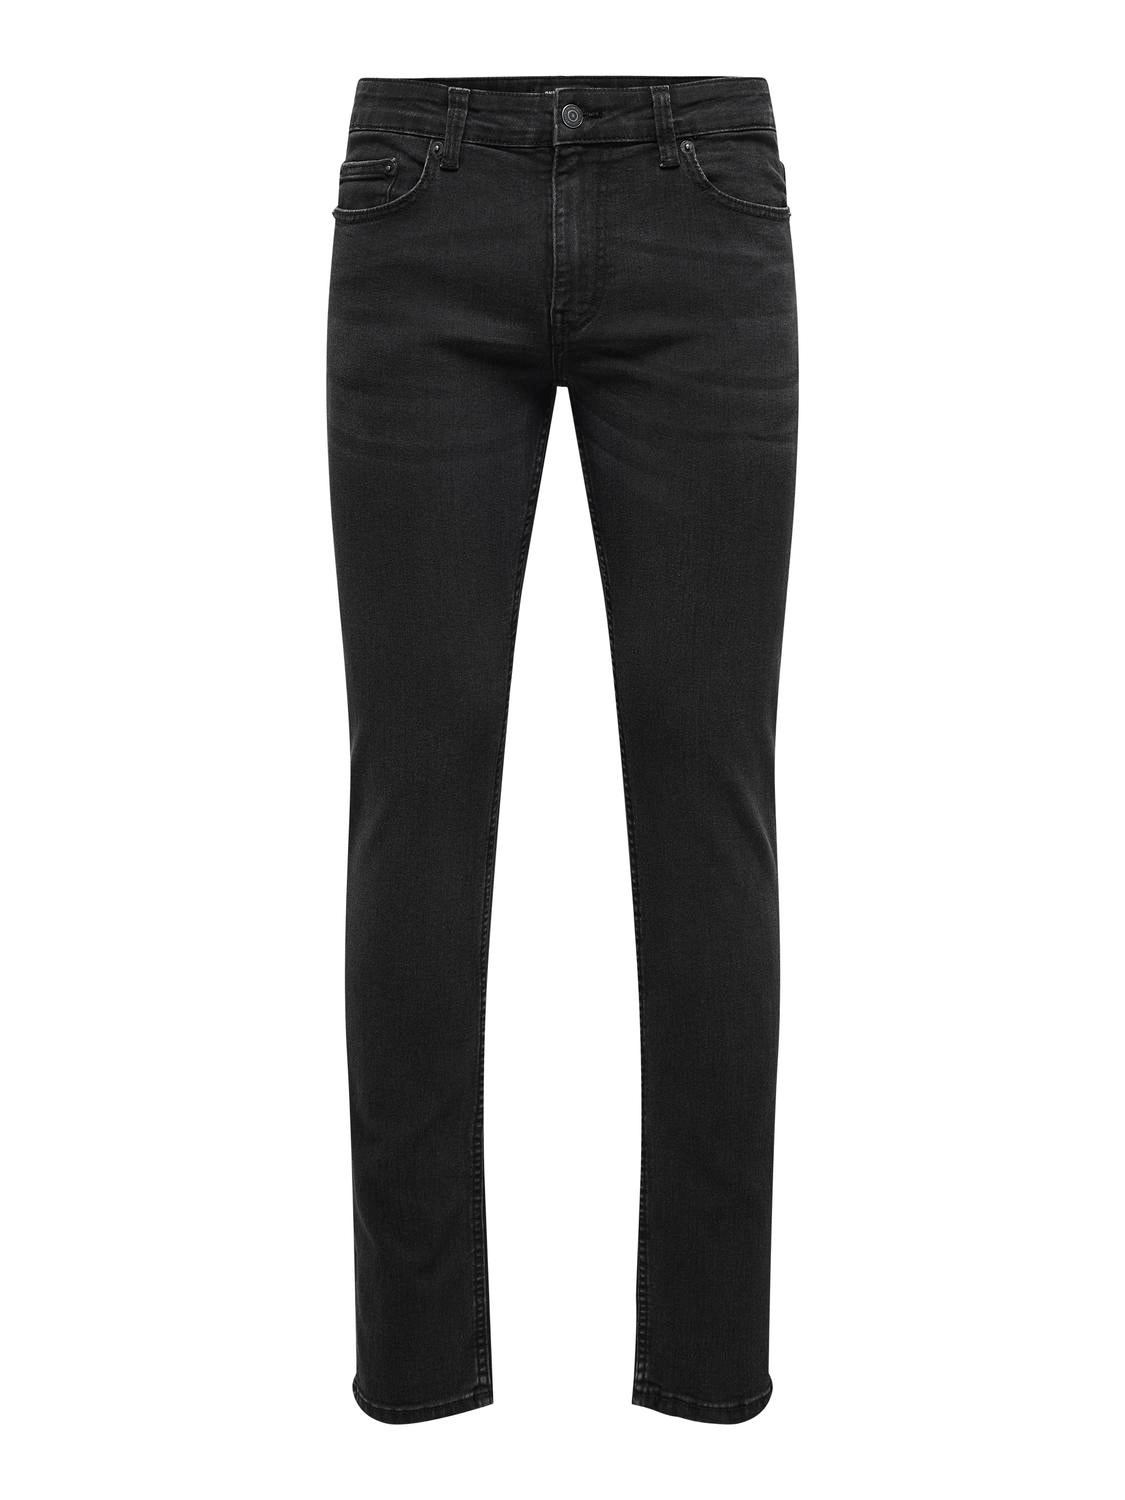 ONLY & SONS Slim Fit Mid waist Jeans -Black Denim - 22027841